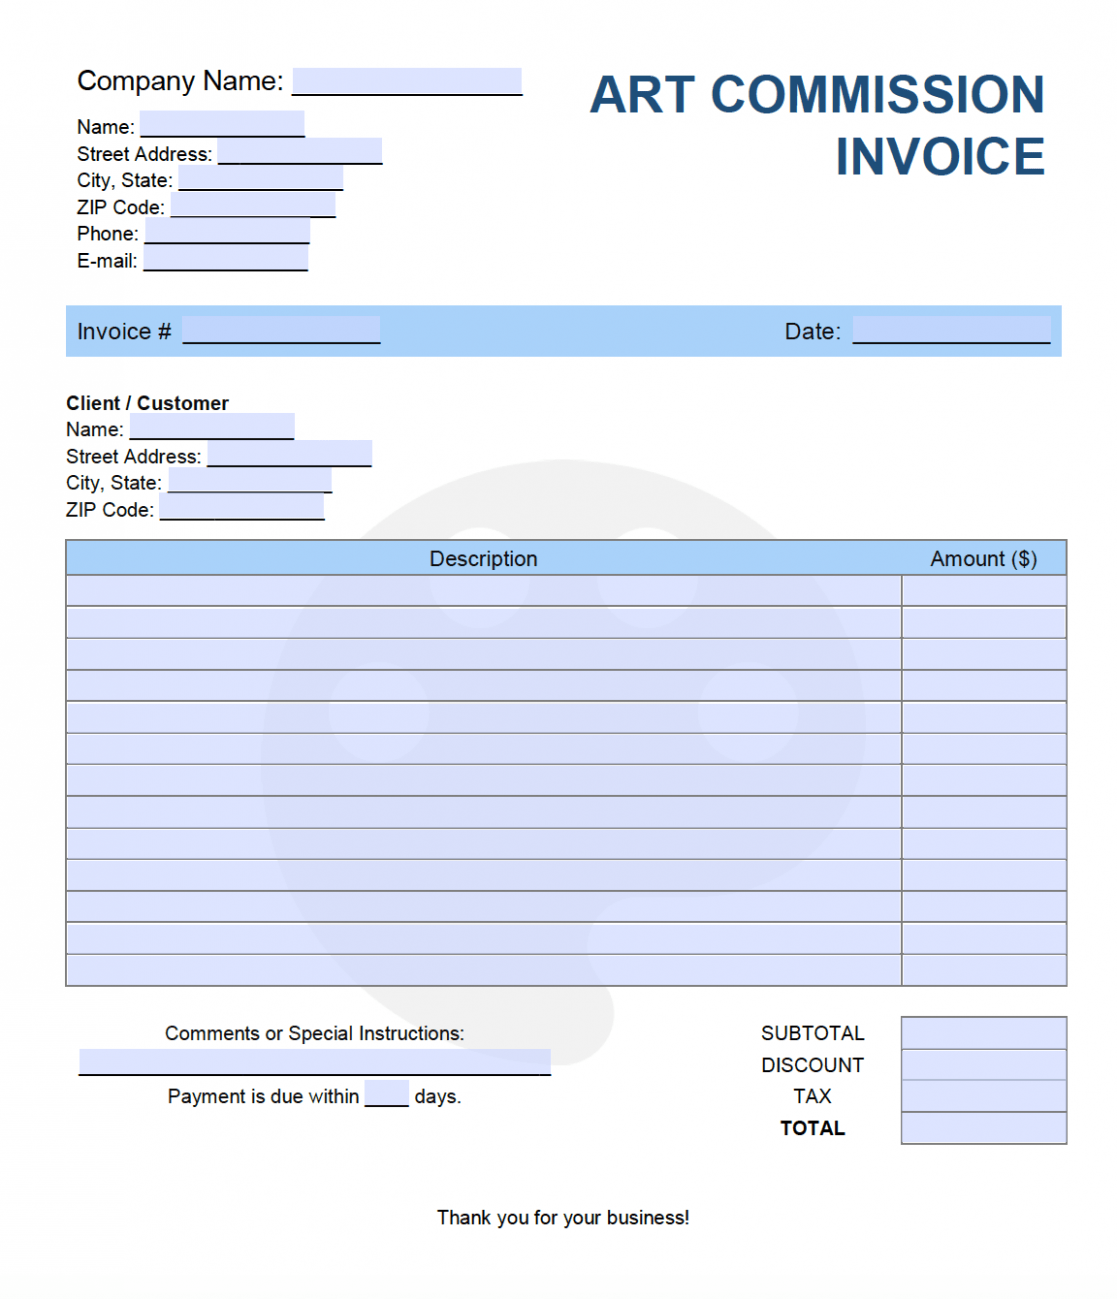 Sample Art Commission Invoice Template Doc